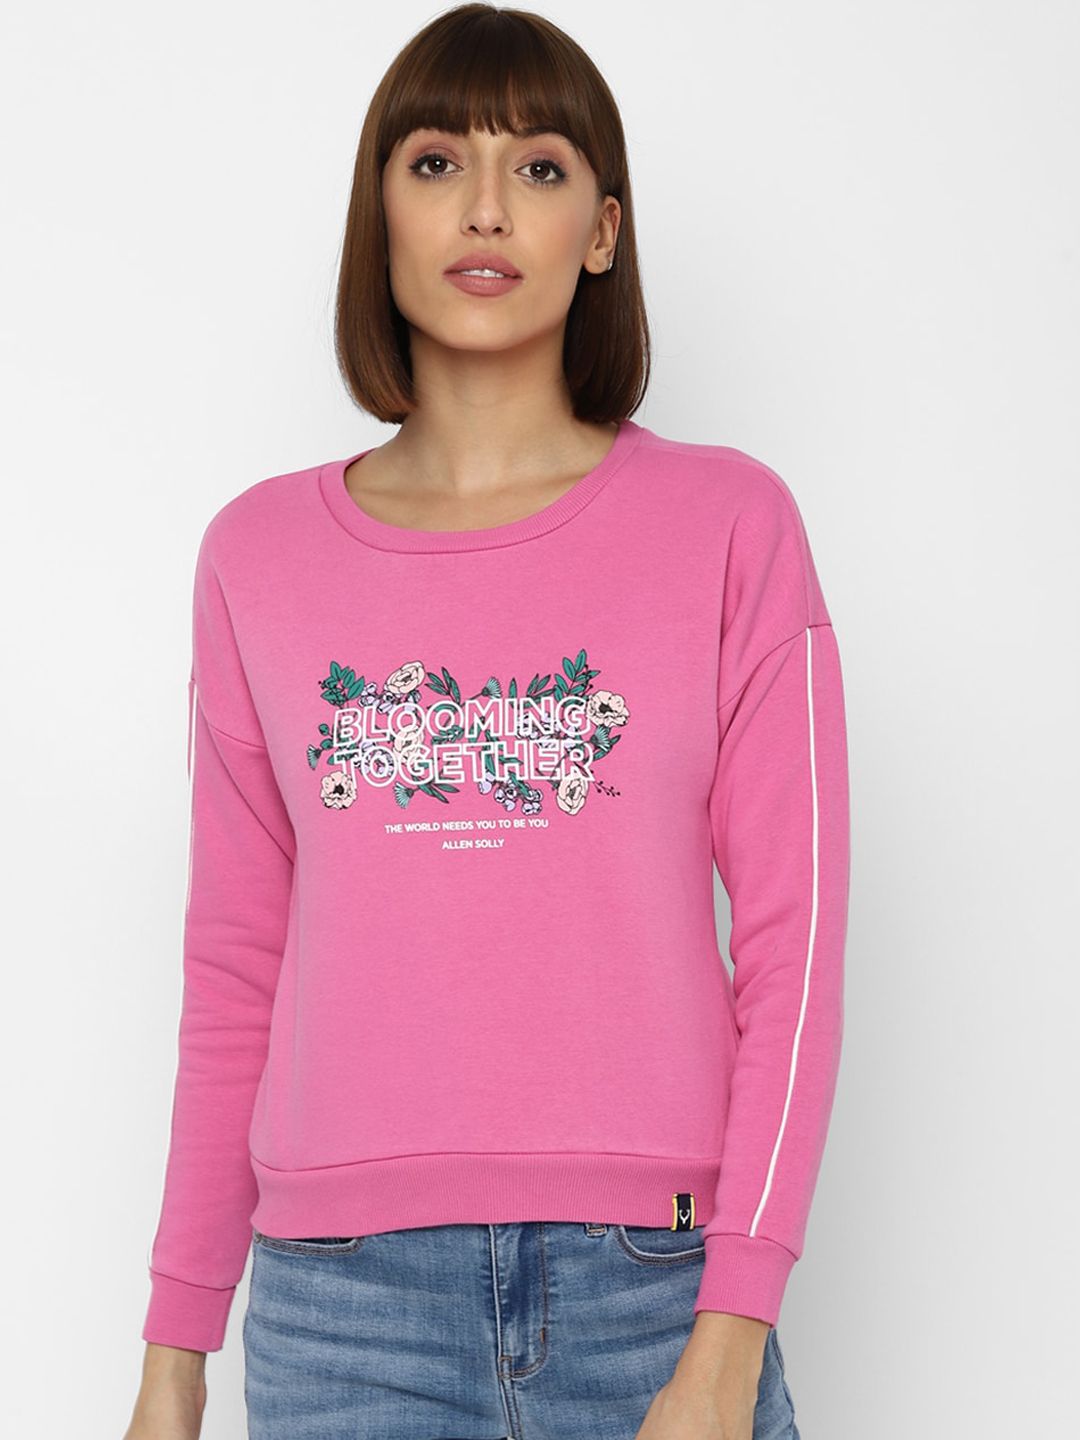 Allen Solly Woman Women Pink Printed Sweatshirt Price in India